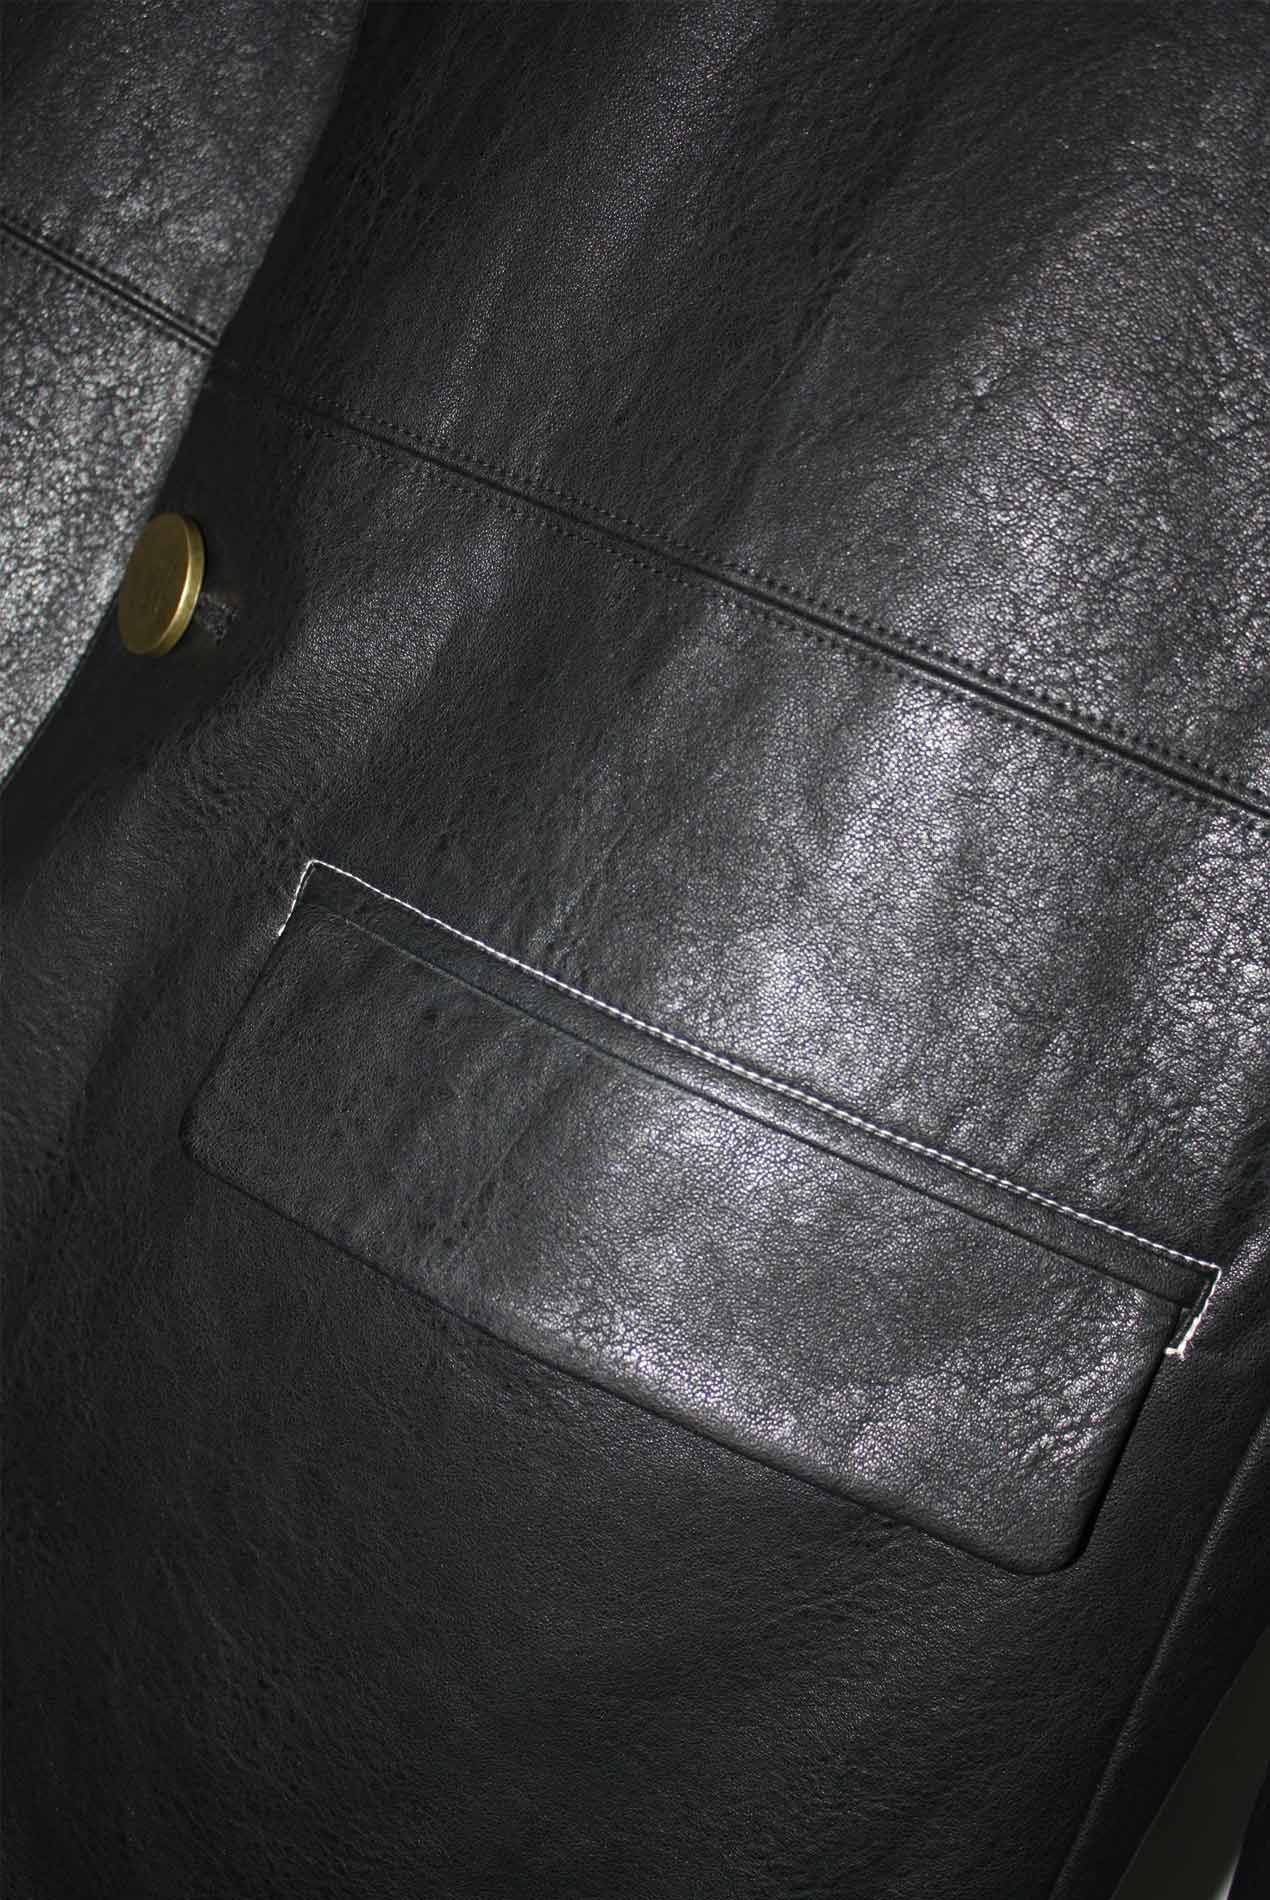 Mule Leather Coat Vintage Black